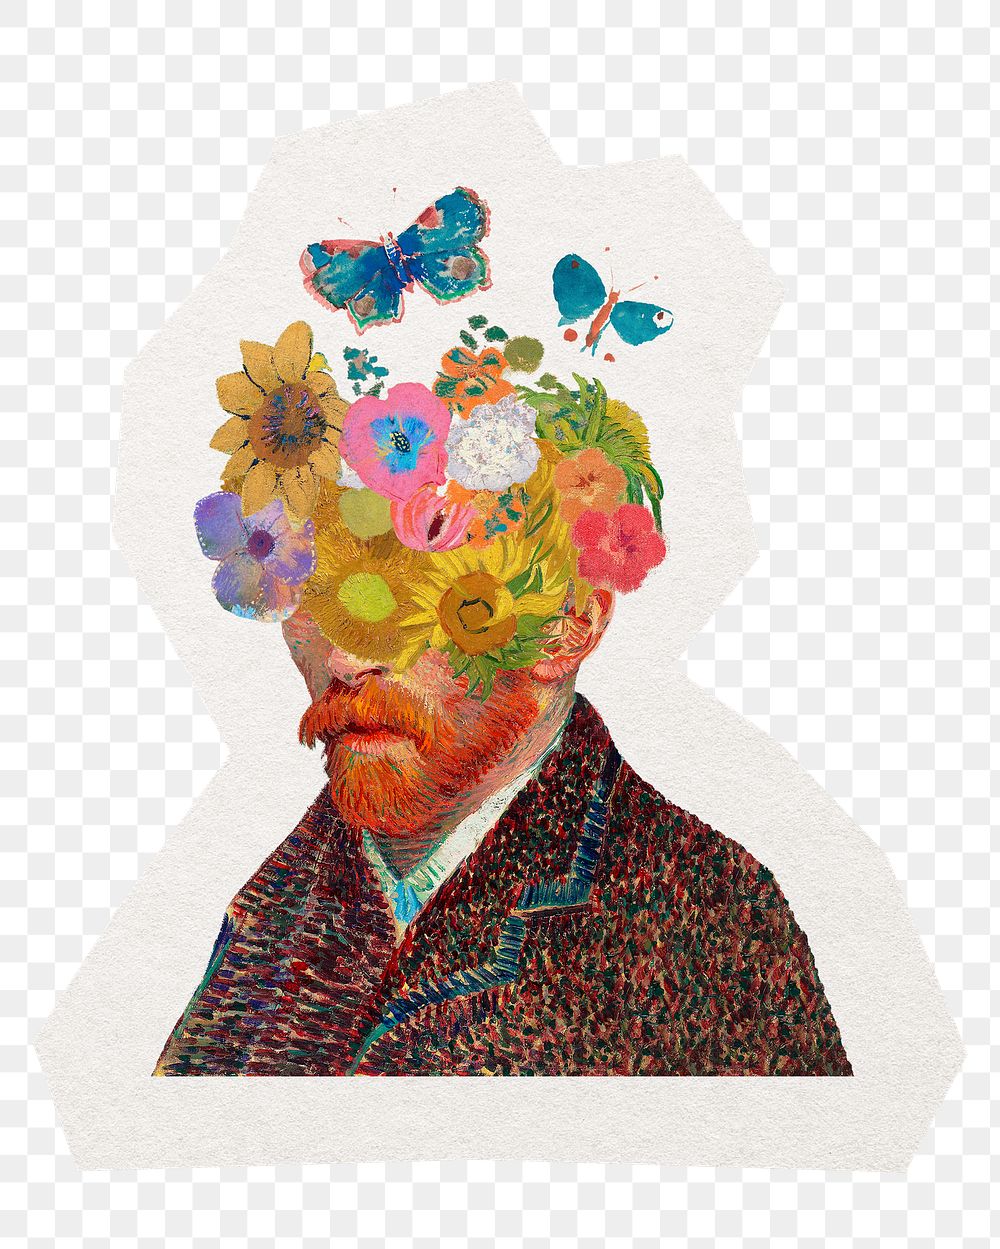 Van Gogh self portrait png sticker floral design in transparent background, remix by rawpixel